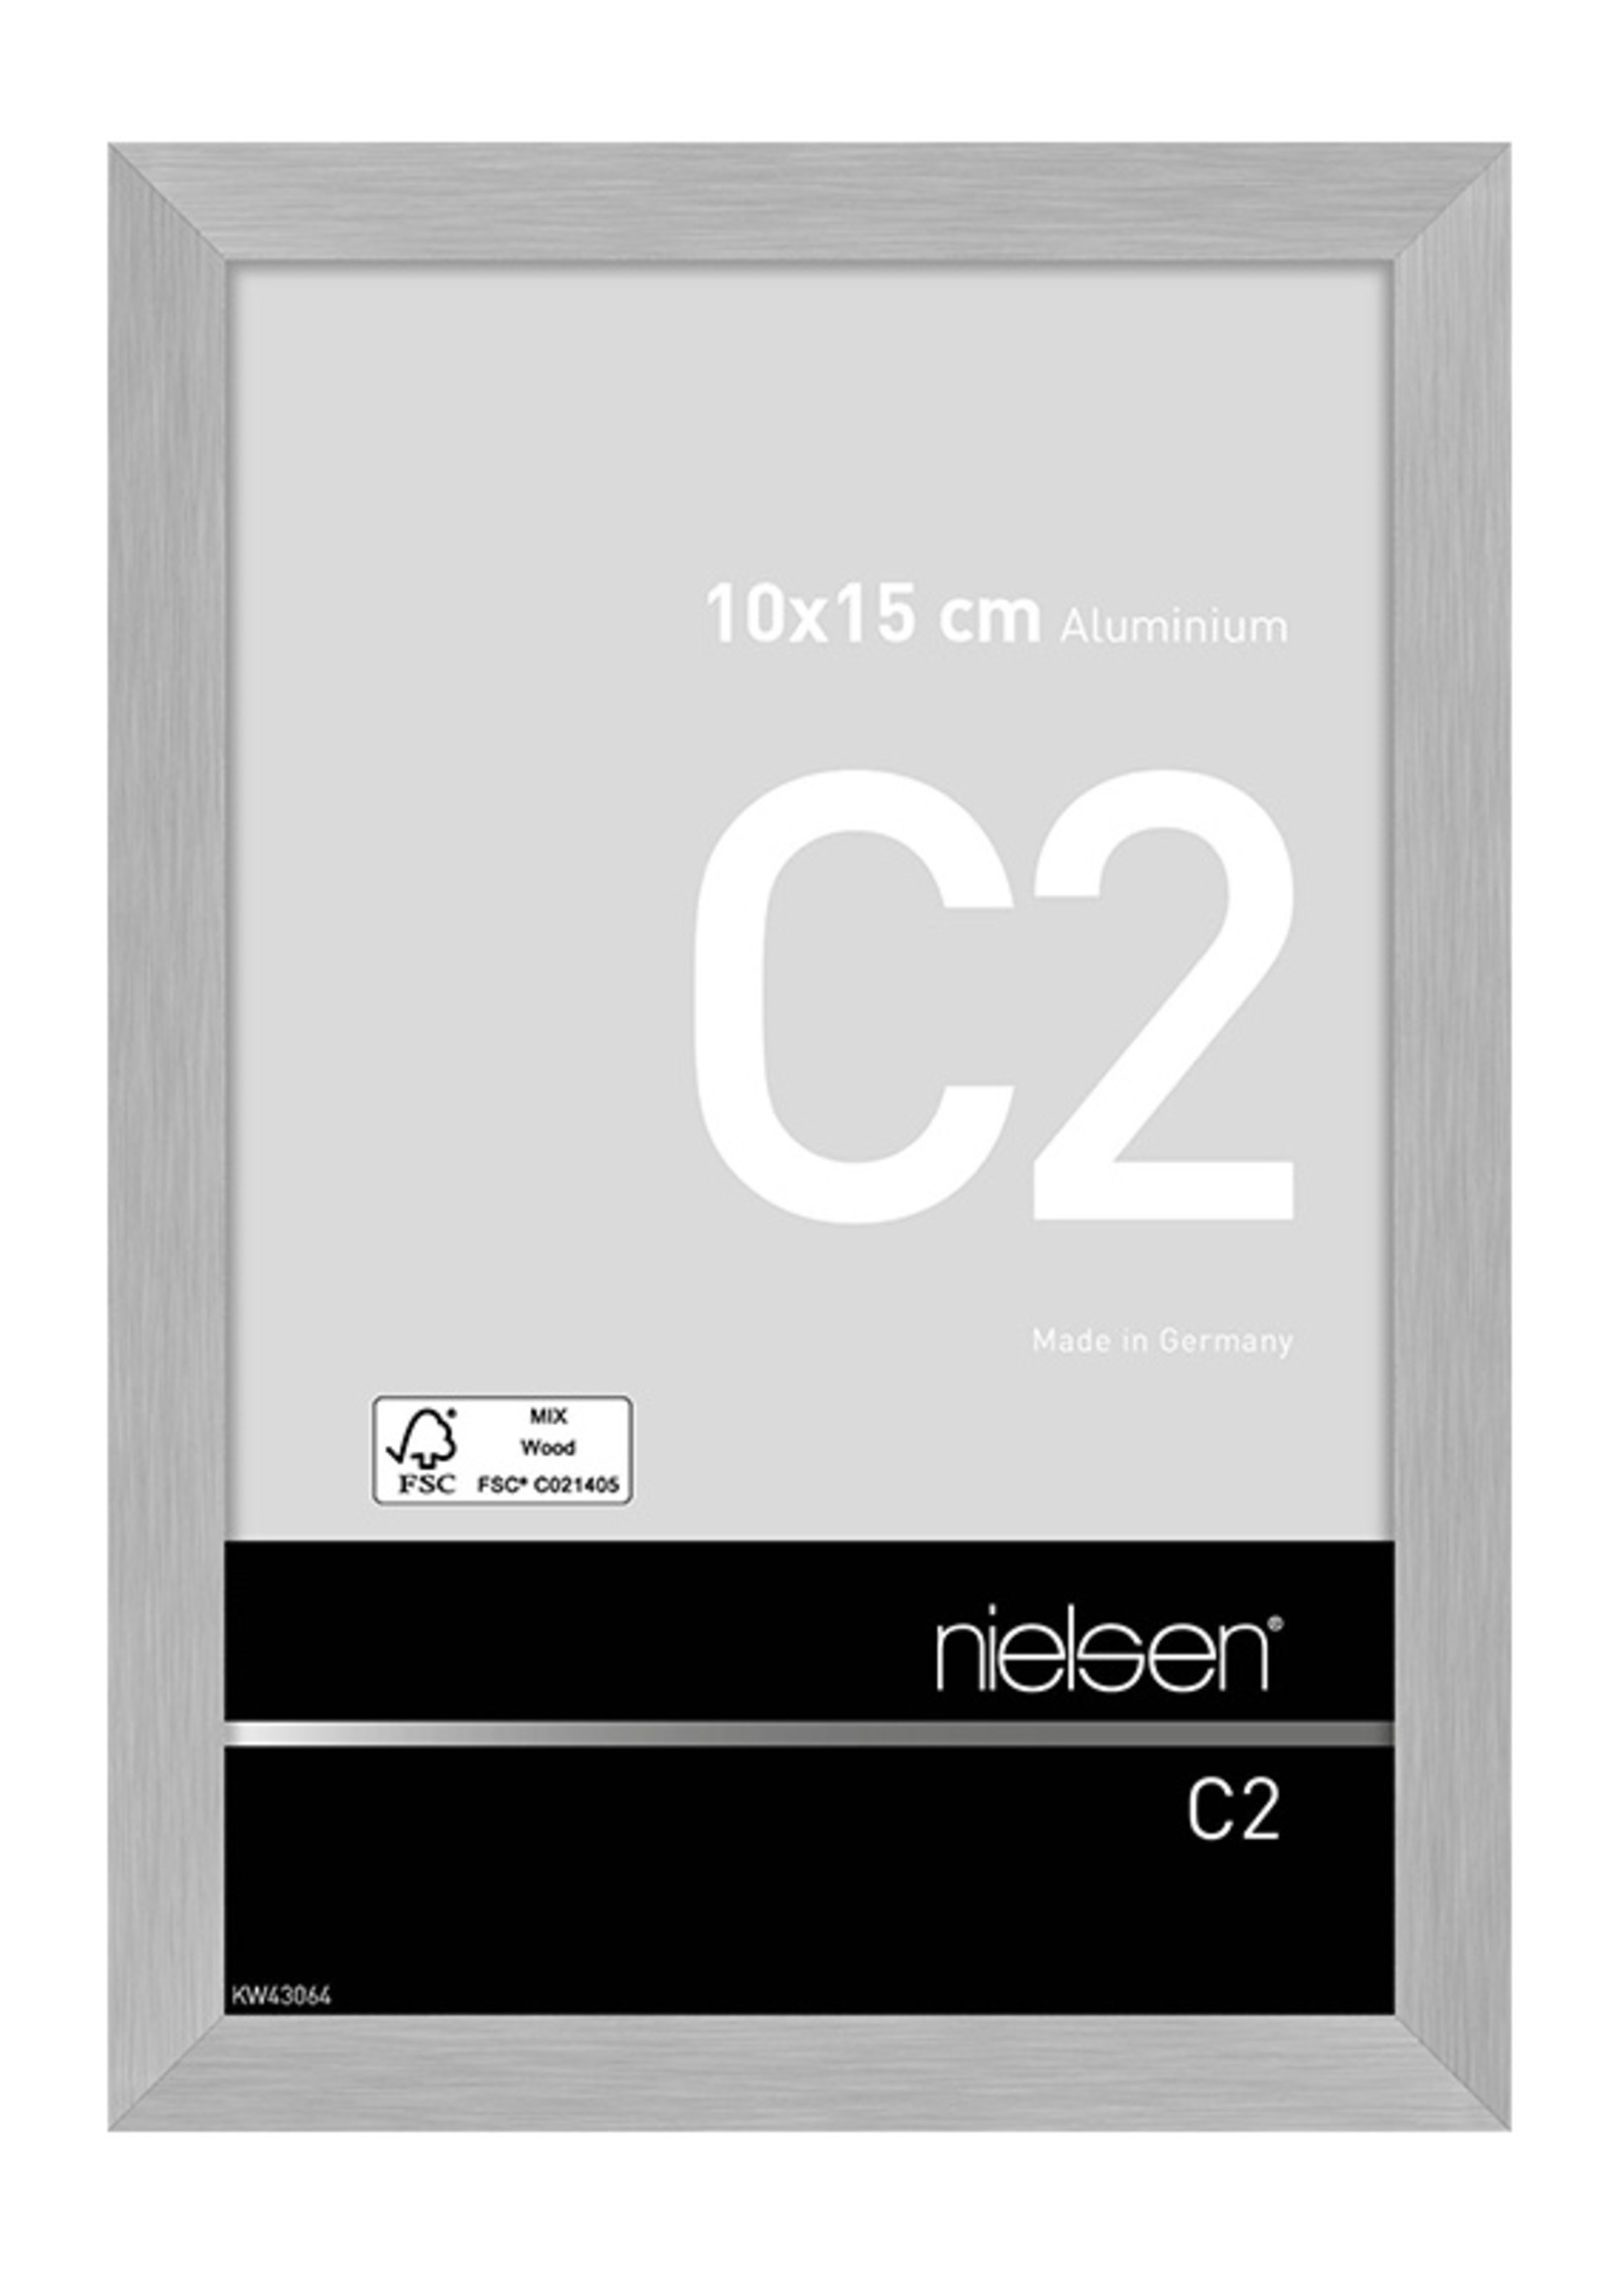 Nielsen C2 Hgl. Silver